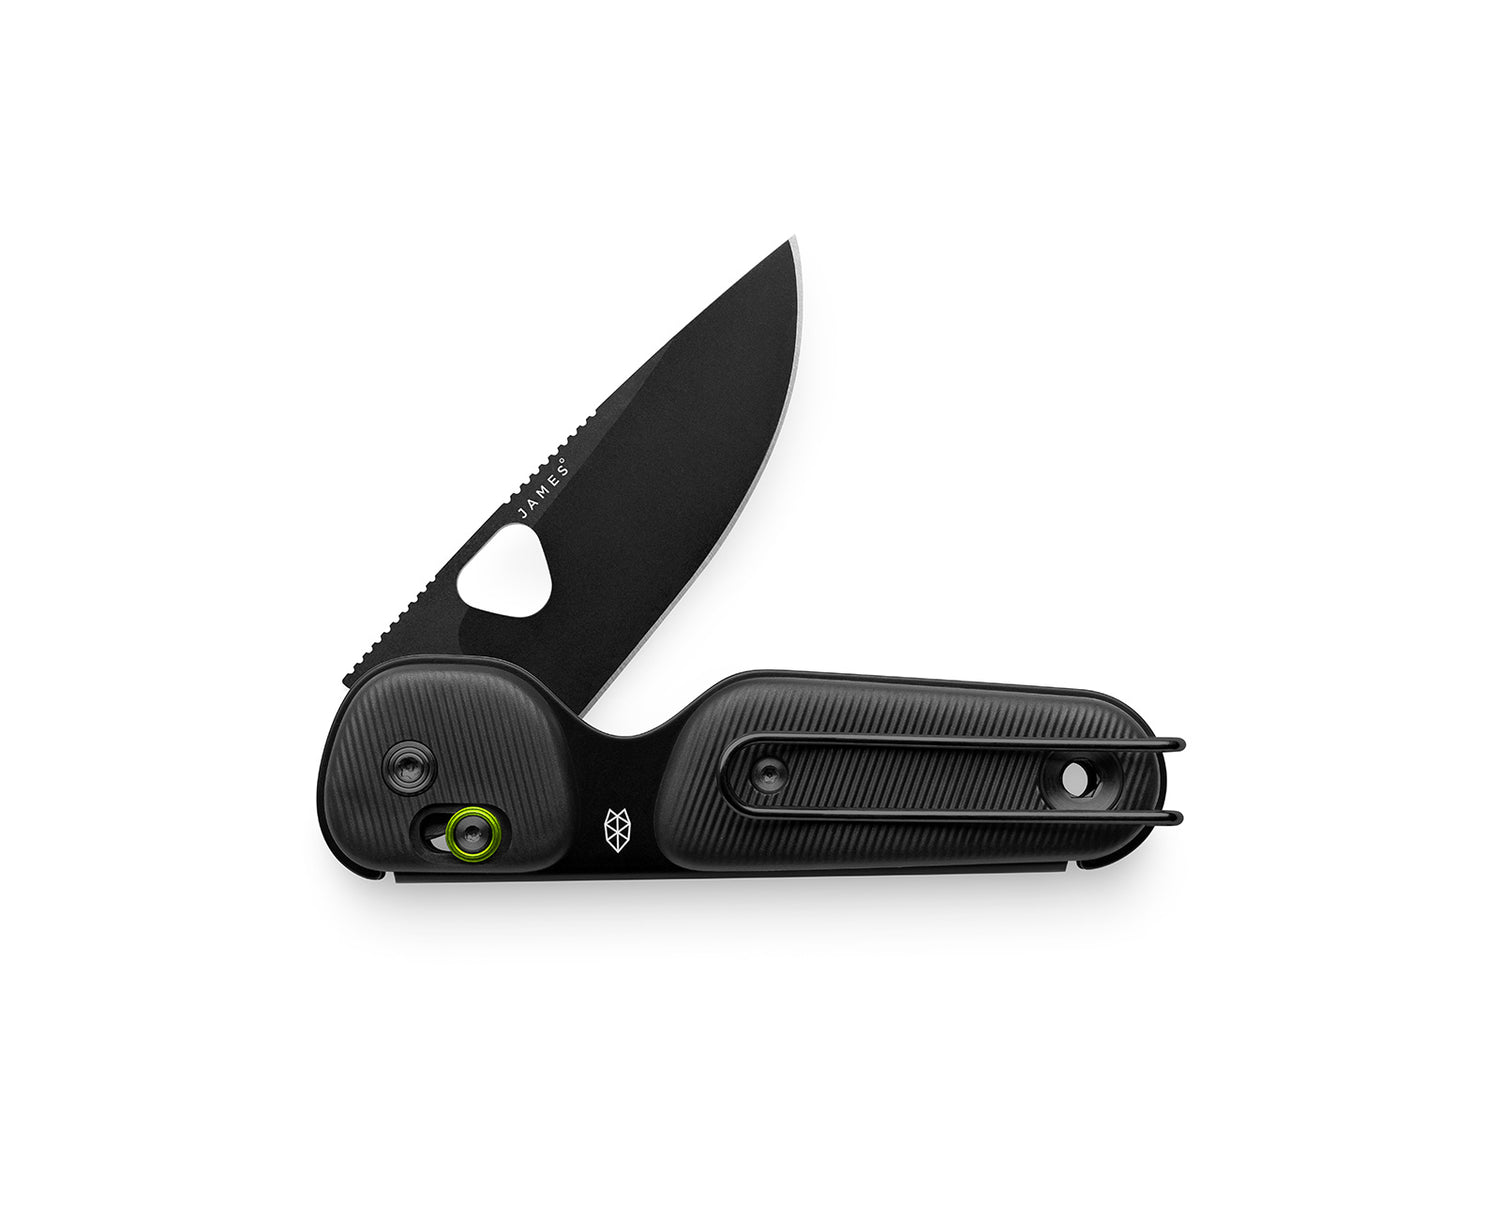 Double L Pocket Knife, Three-Blade